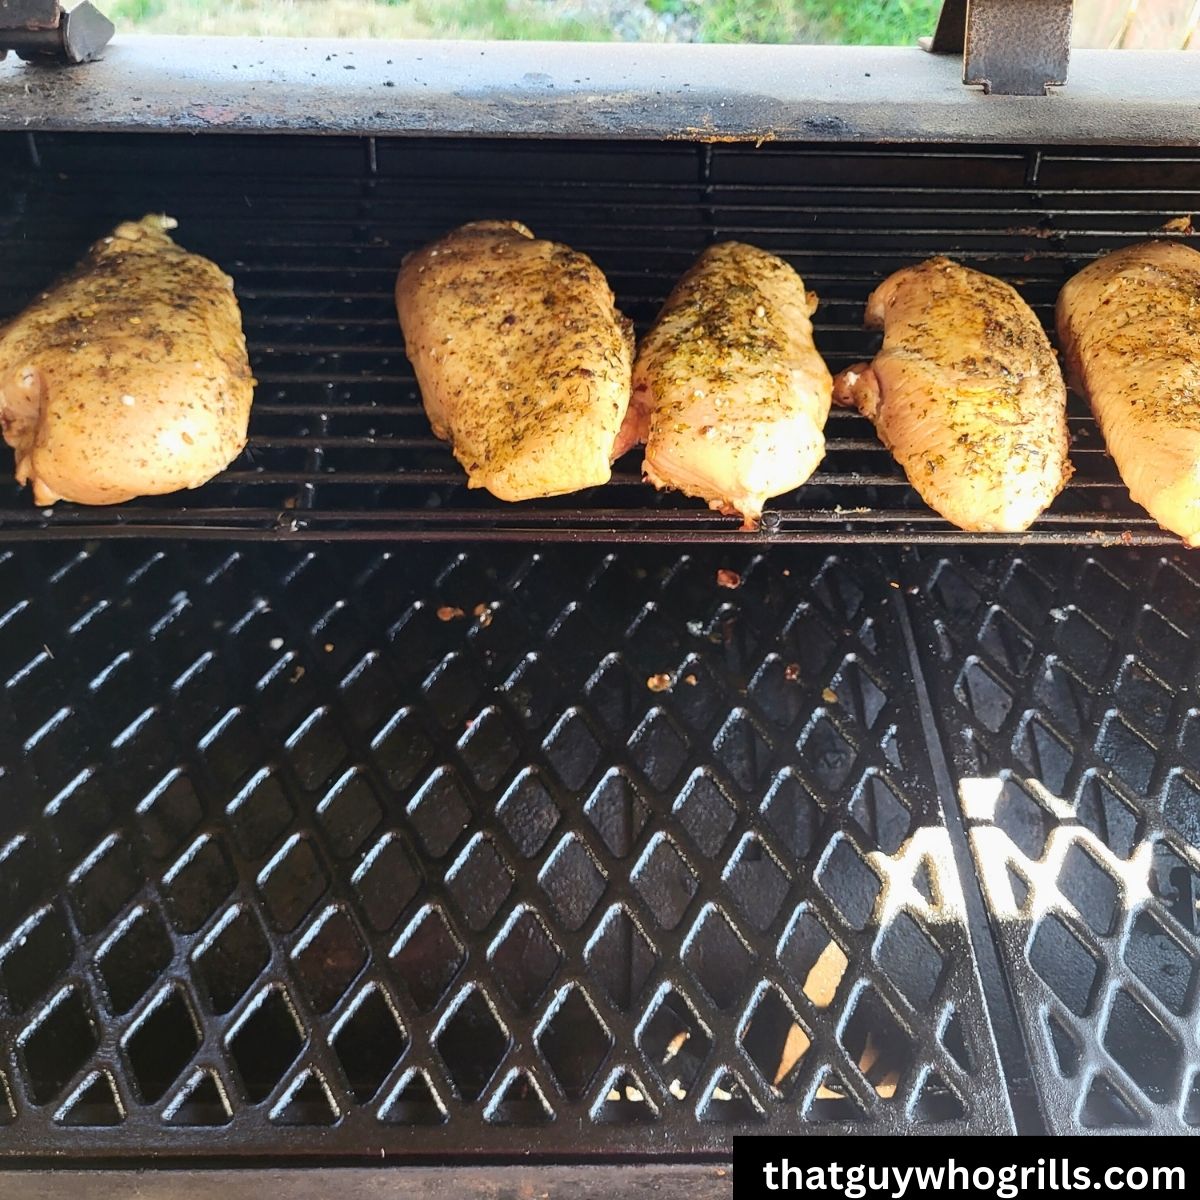 Boneless skinless chicken breasts on pitboss pellet grill smoking